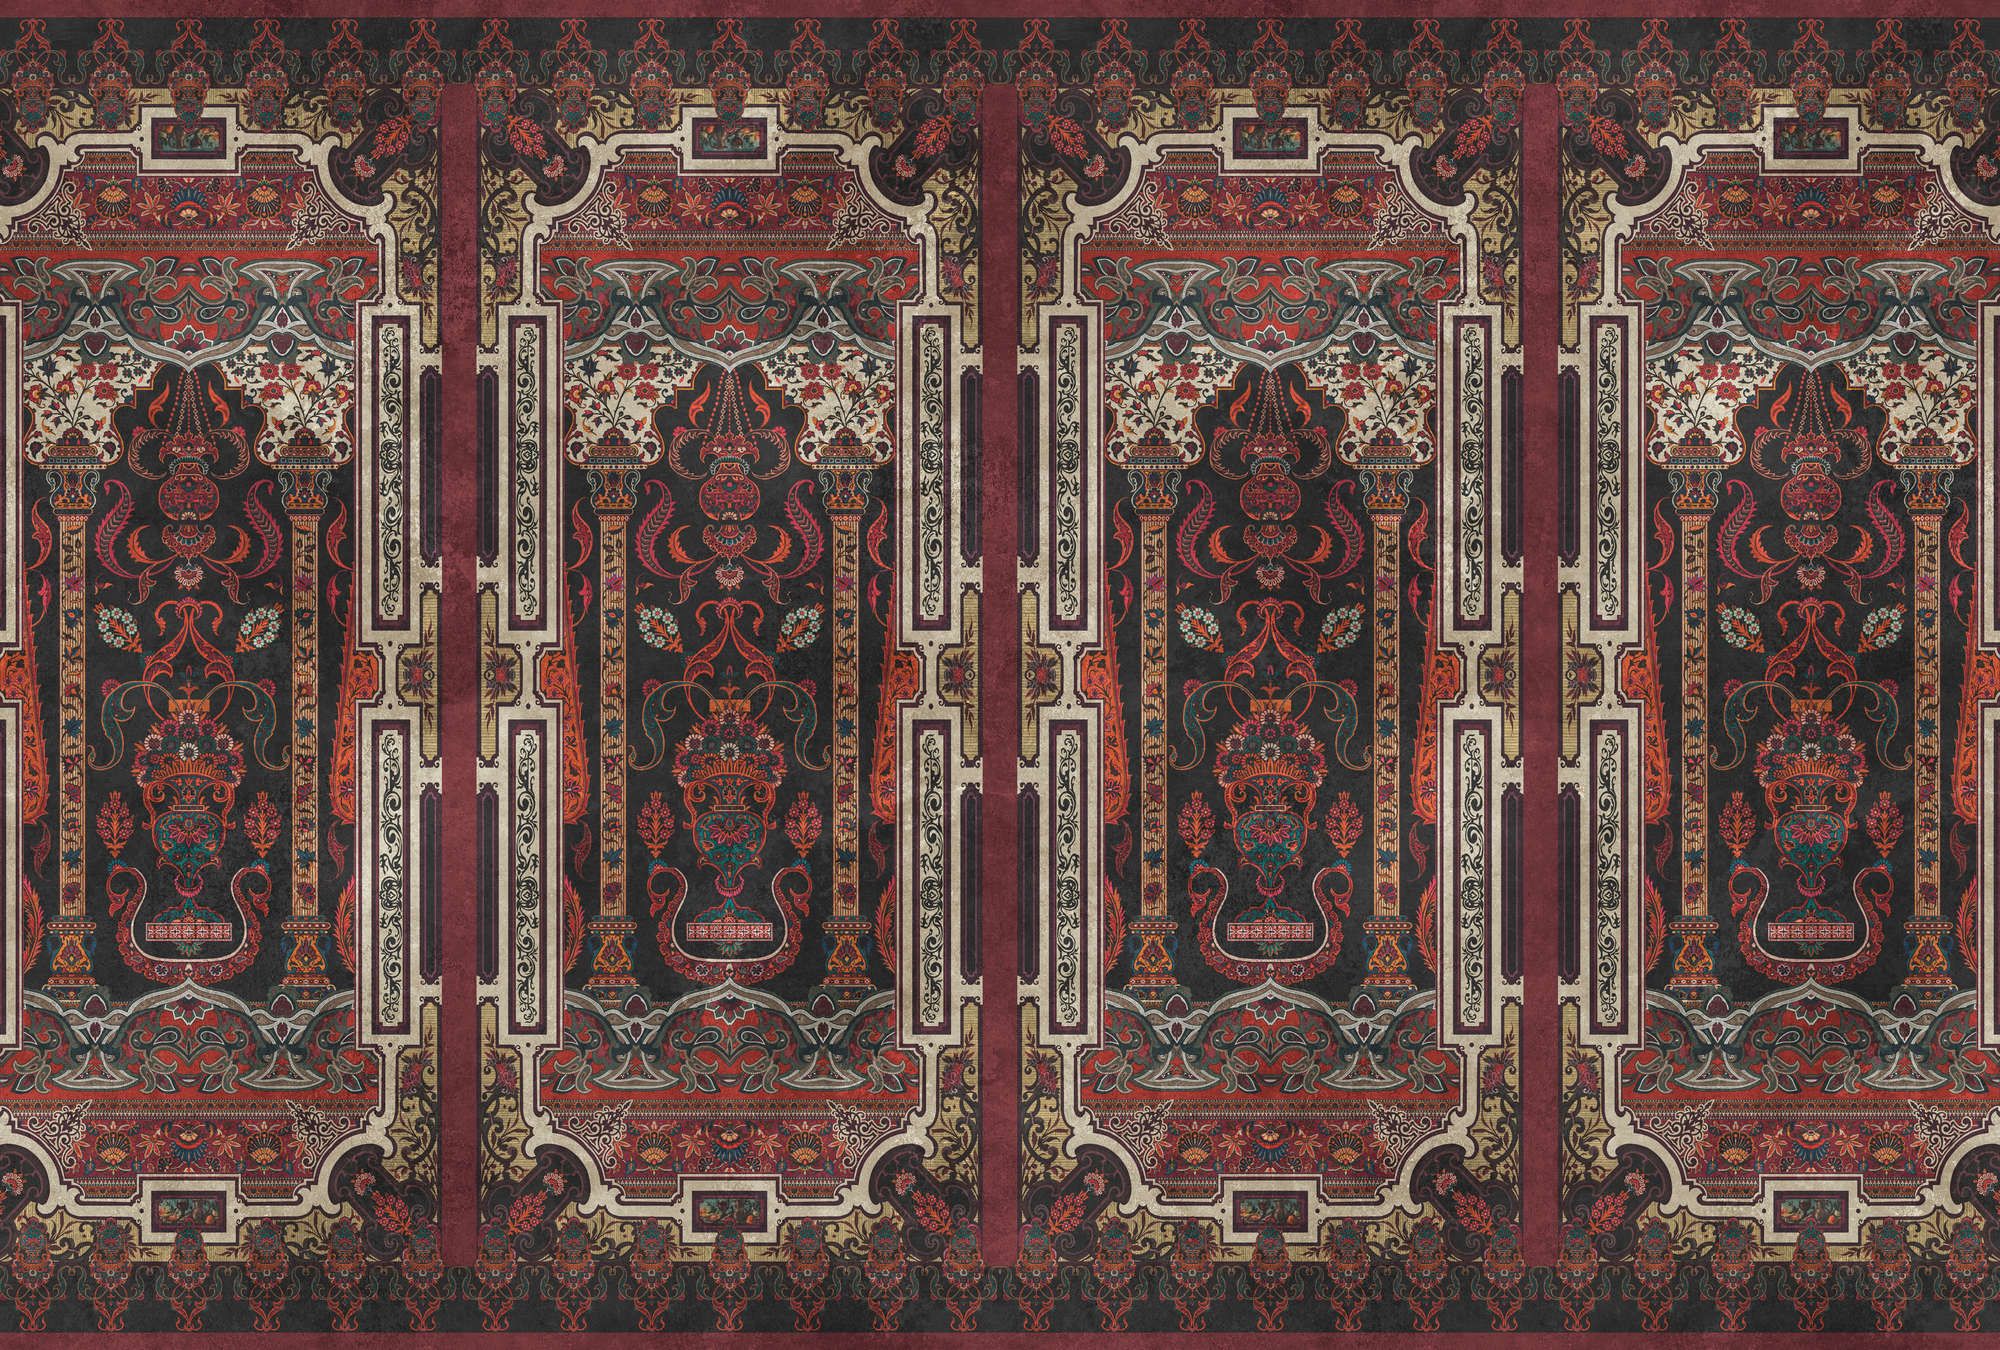             Fotomurali »karim« - Rivestimento ornamentale con texture vintage in gesso - Rosso scuro | opaco, tessuto non tessuto liscio
        